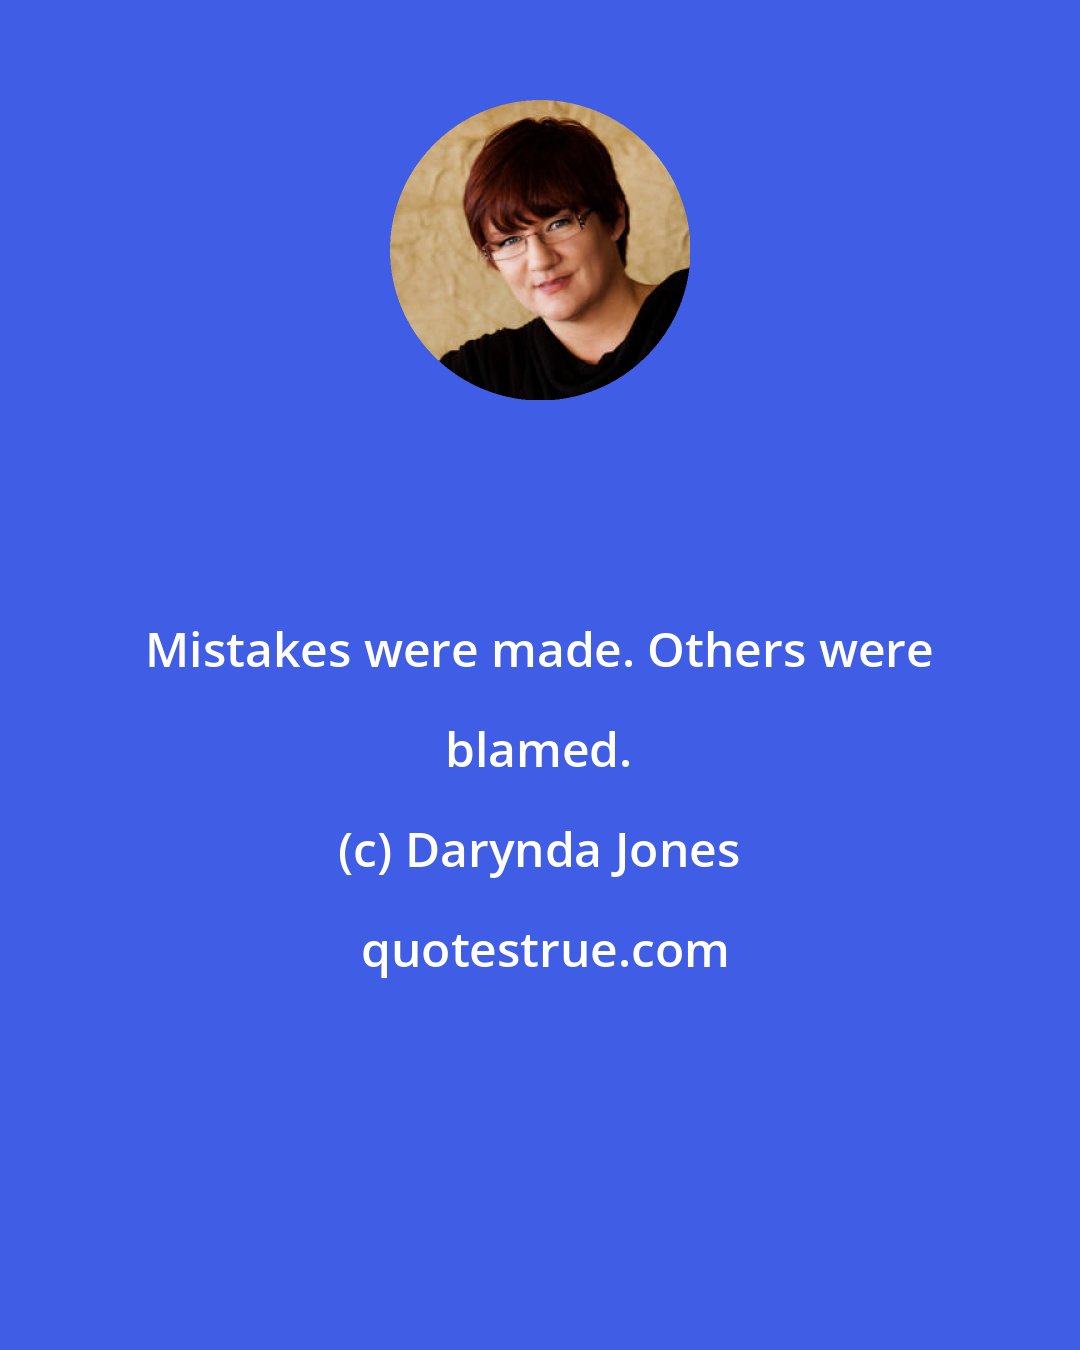 Darynda Jones: Mistakes were made. Others were blamed.